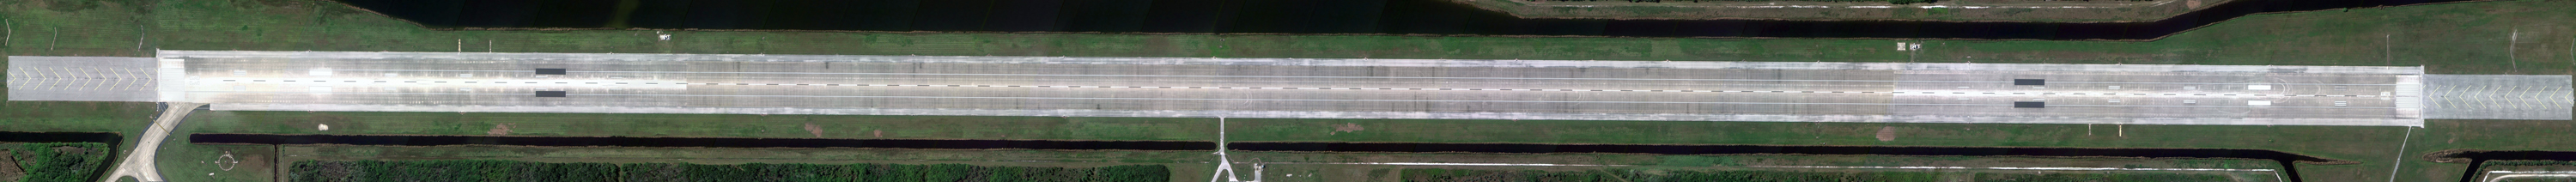 Shuttle Landing Facility Runway (2).jpg